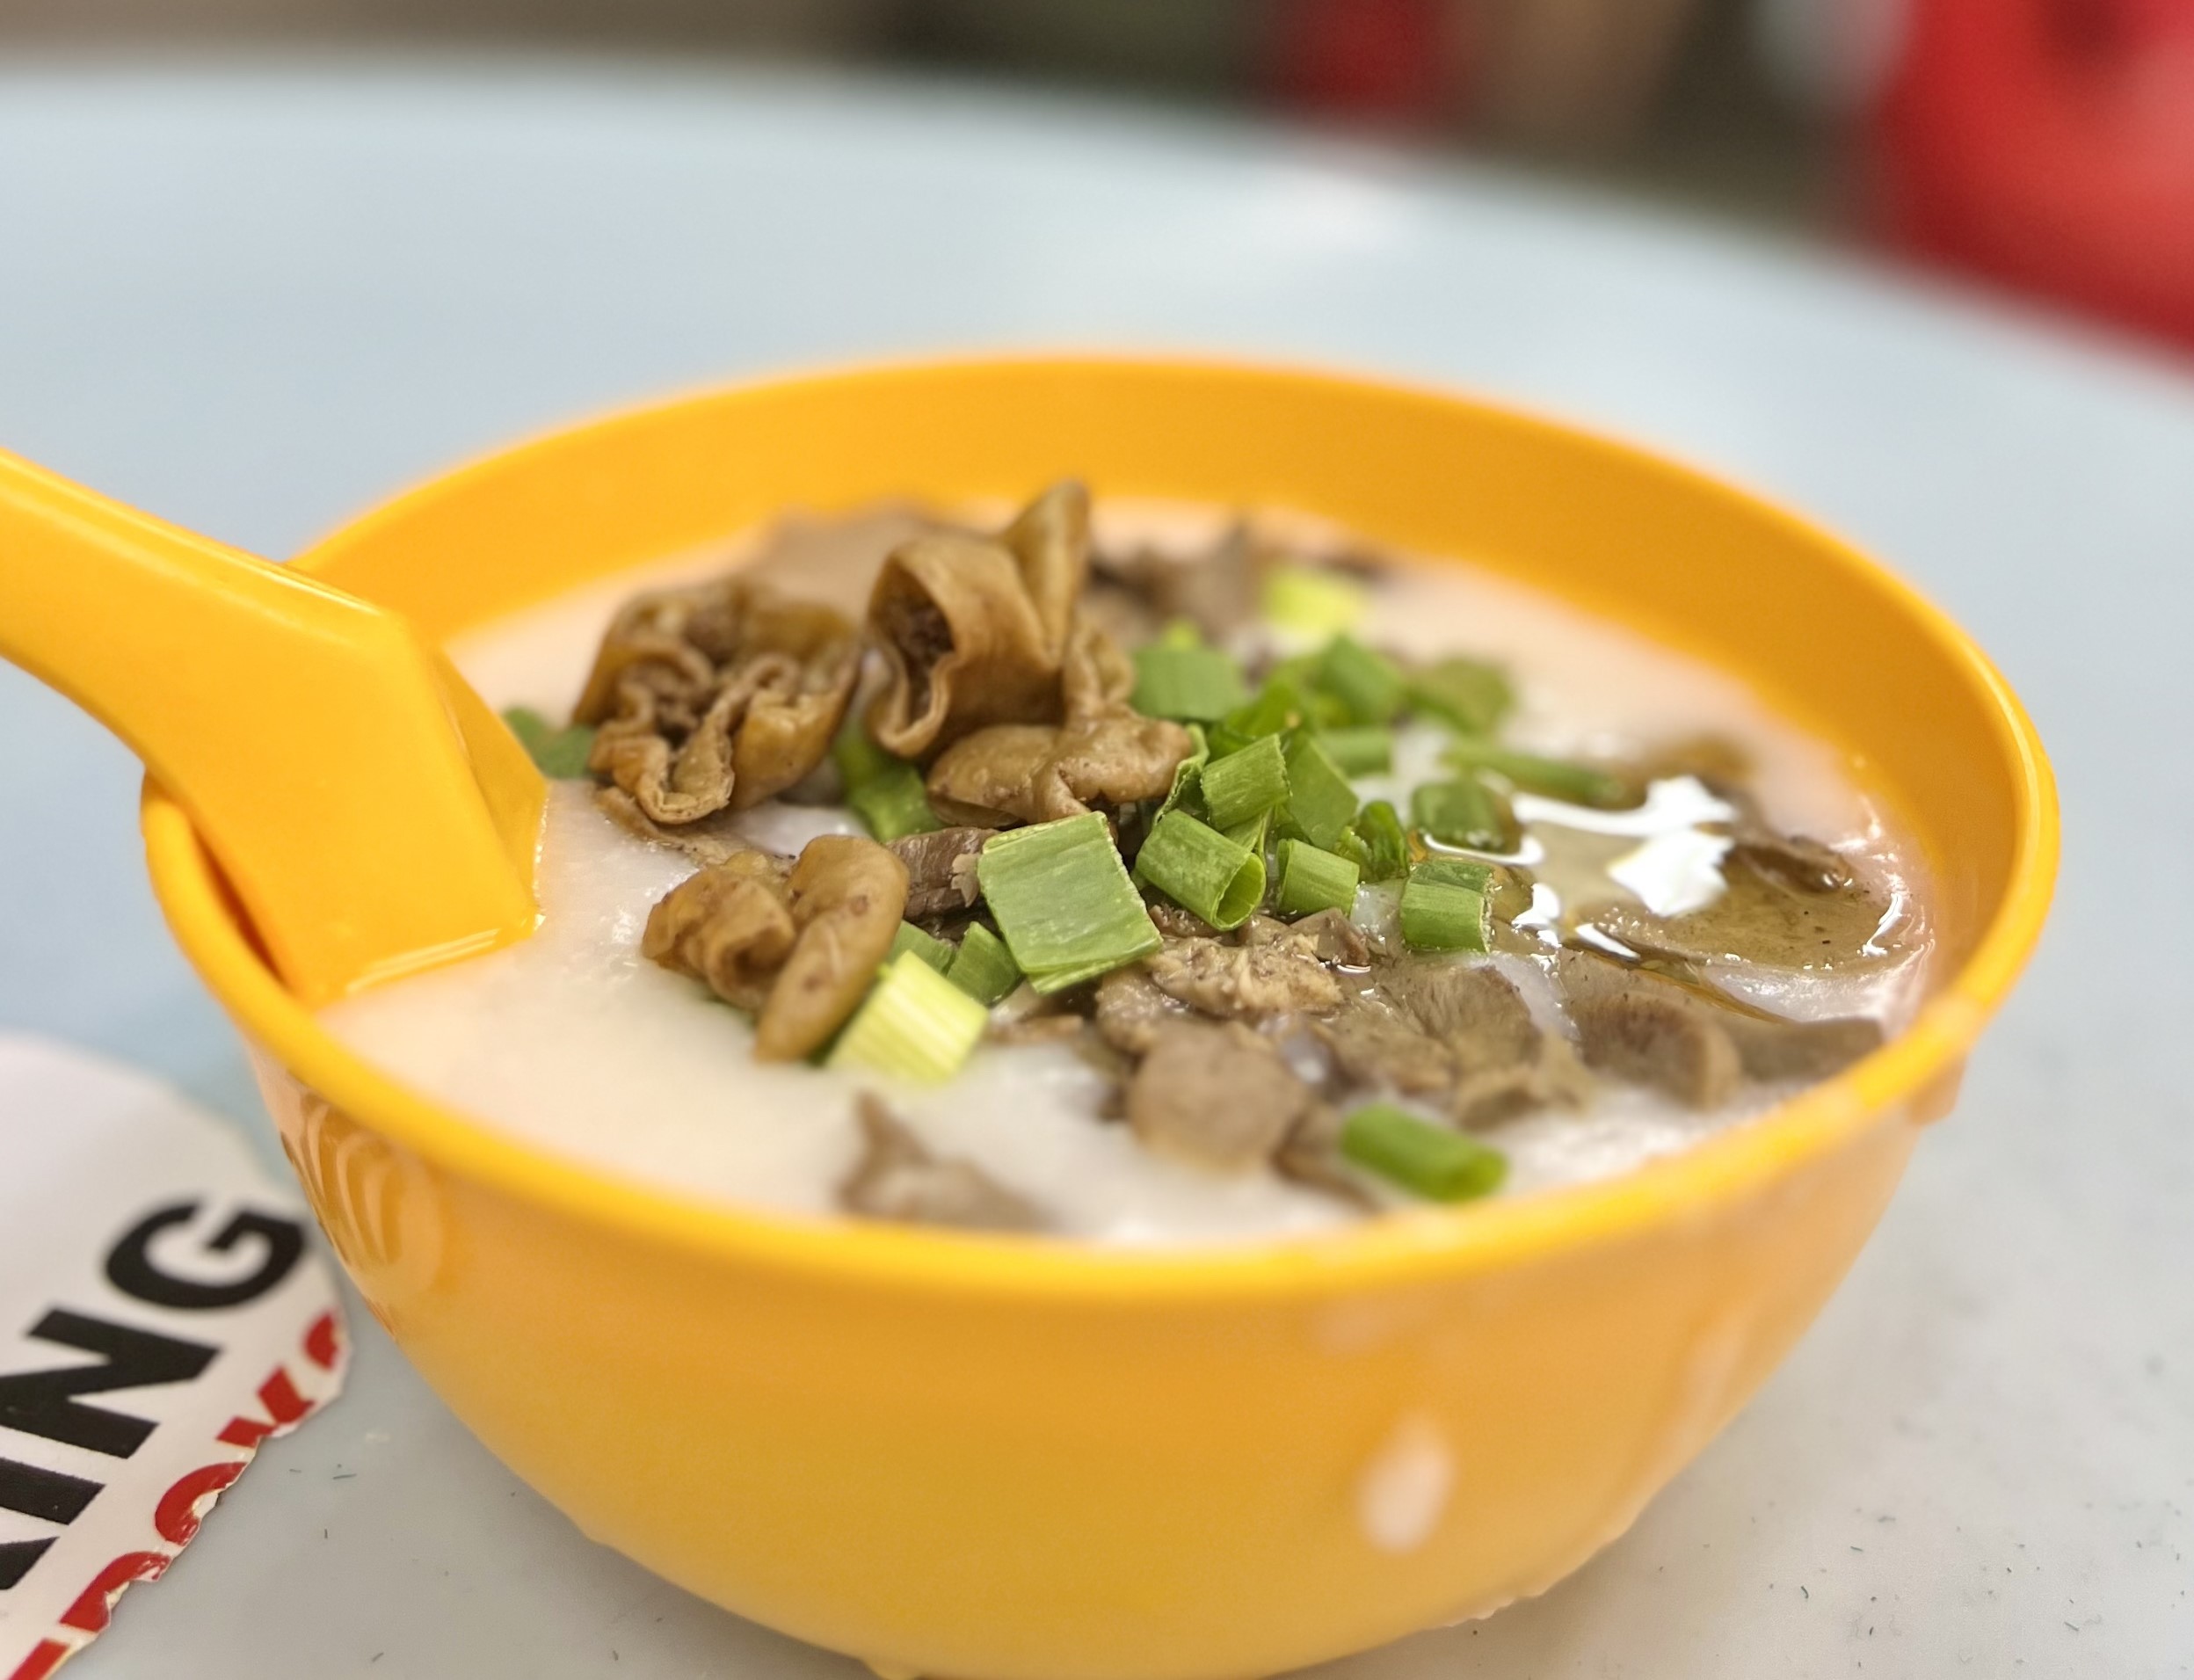 Petaling Street food - Hon Kee porridge